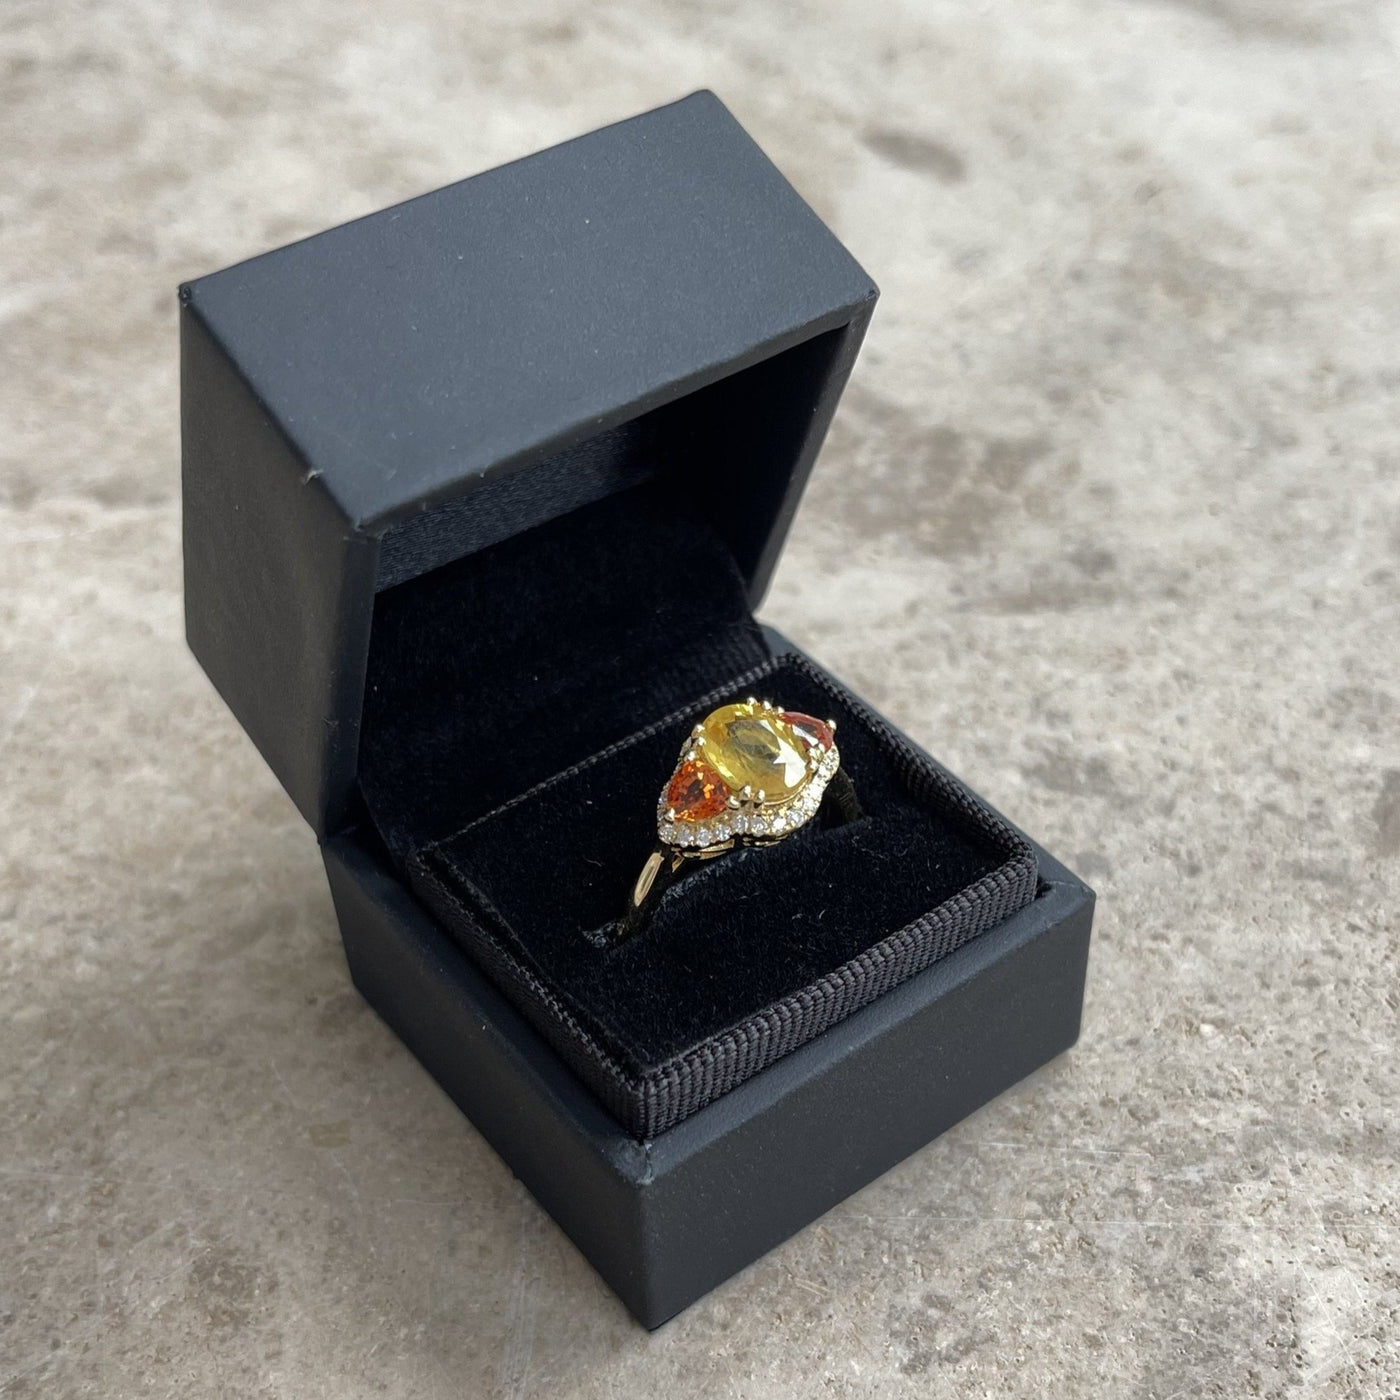 18CT Yellow Gold Yellow and Orange Sapphire and Diamond Ring